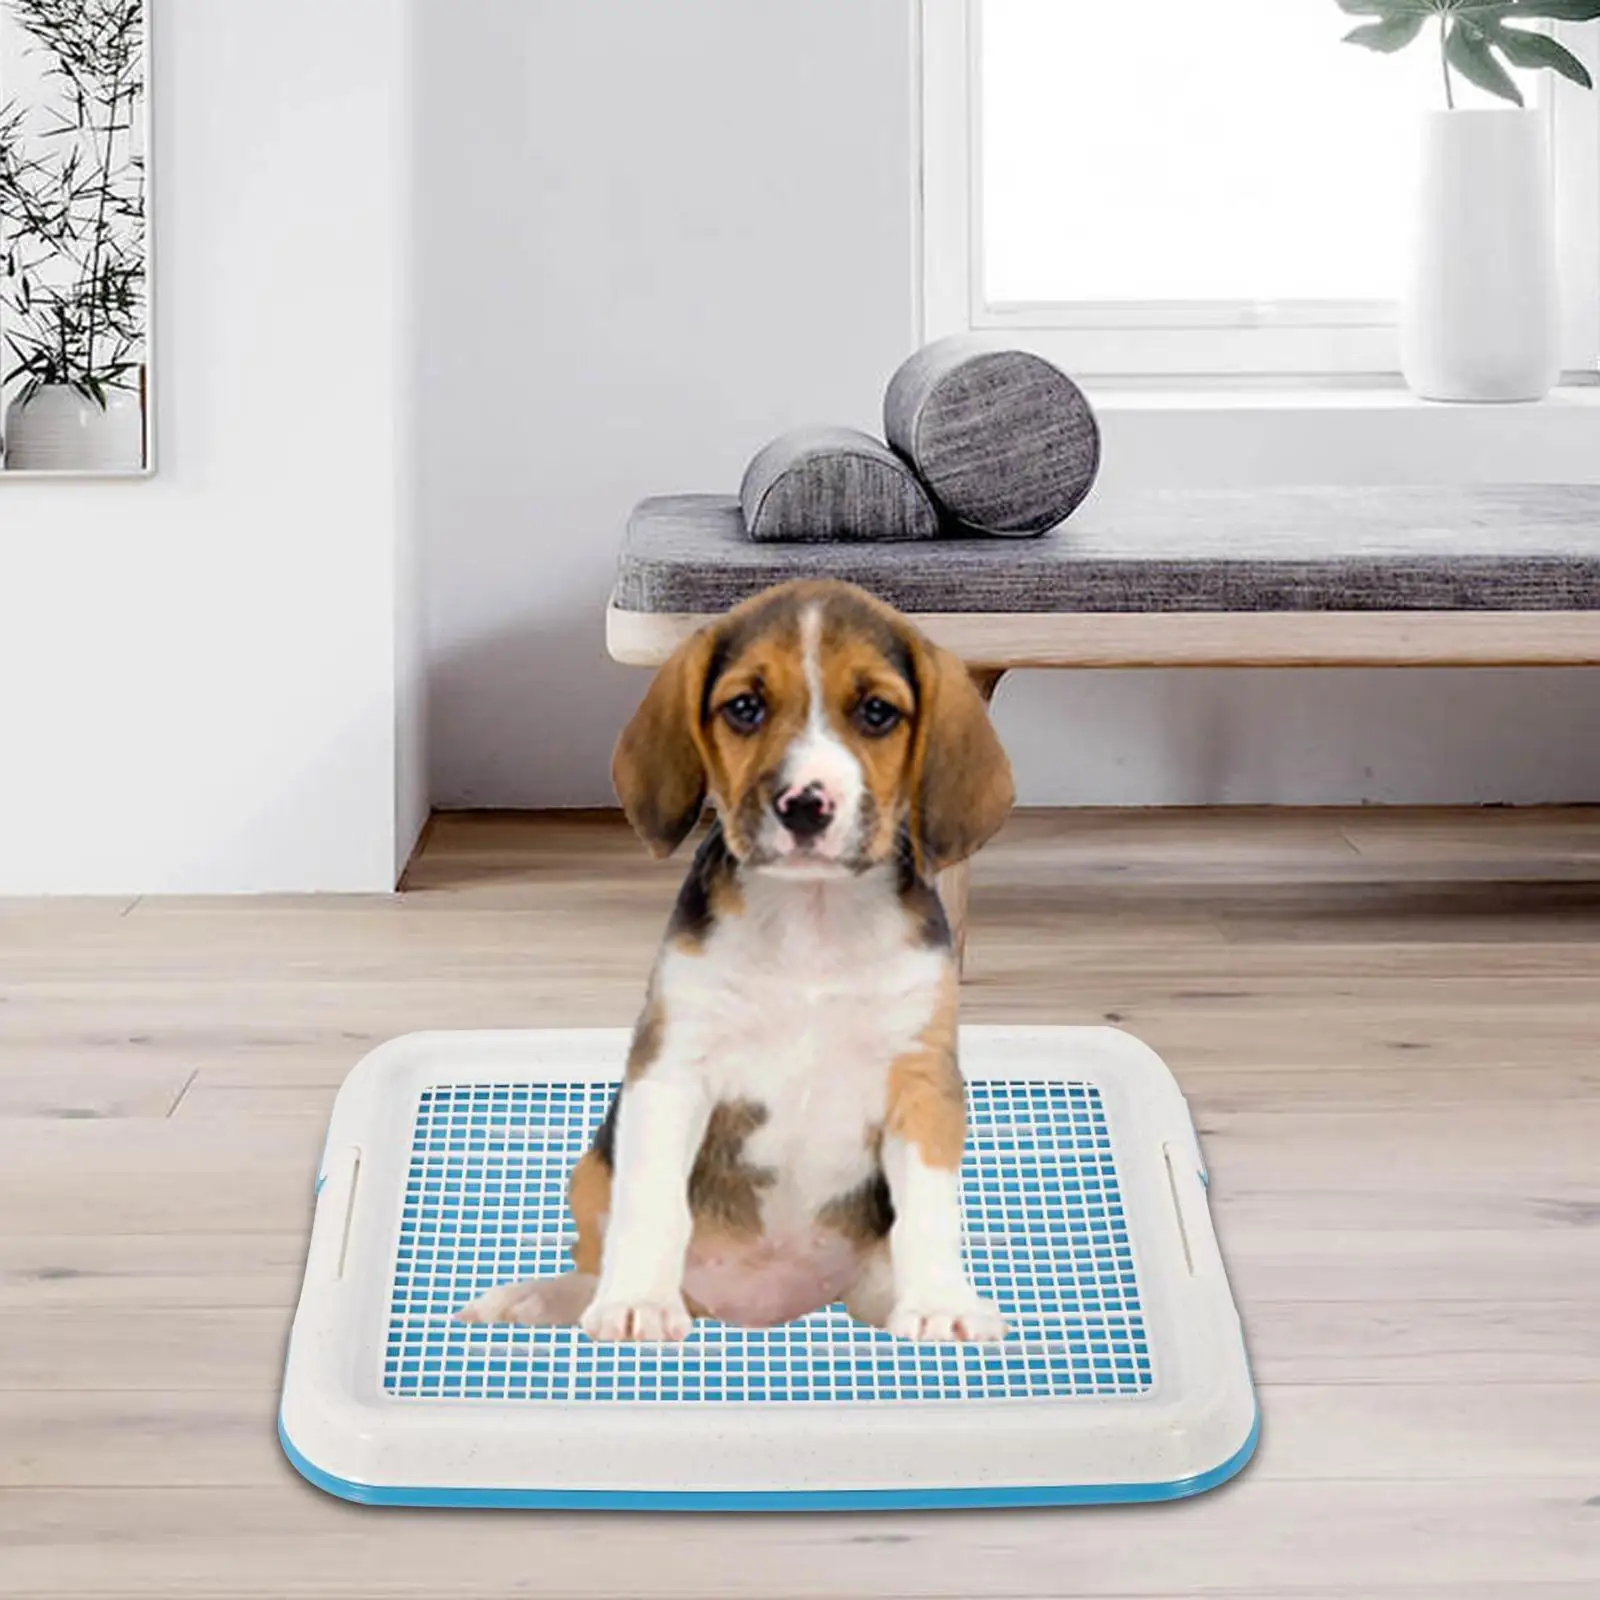 Dog Potty Toilet Training Tray 18.5x13.8 inch Anti Slip with Secure Latch Dog Potty Tray Mesh Potty Training Tray for Small Dogs